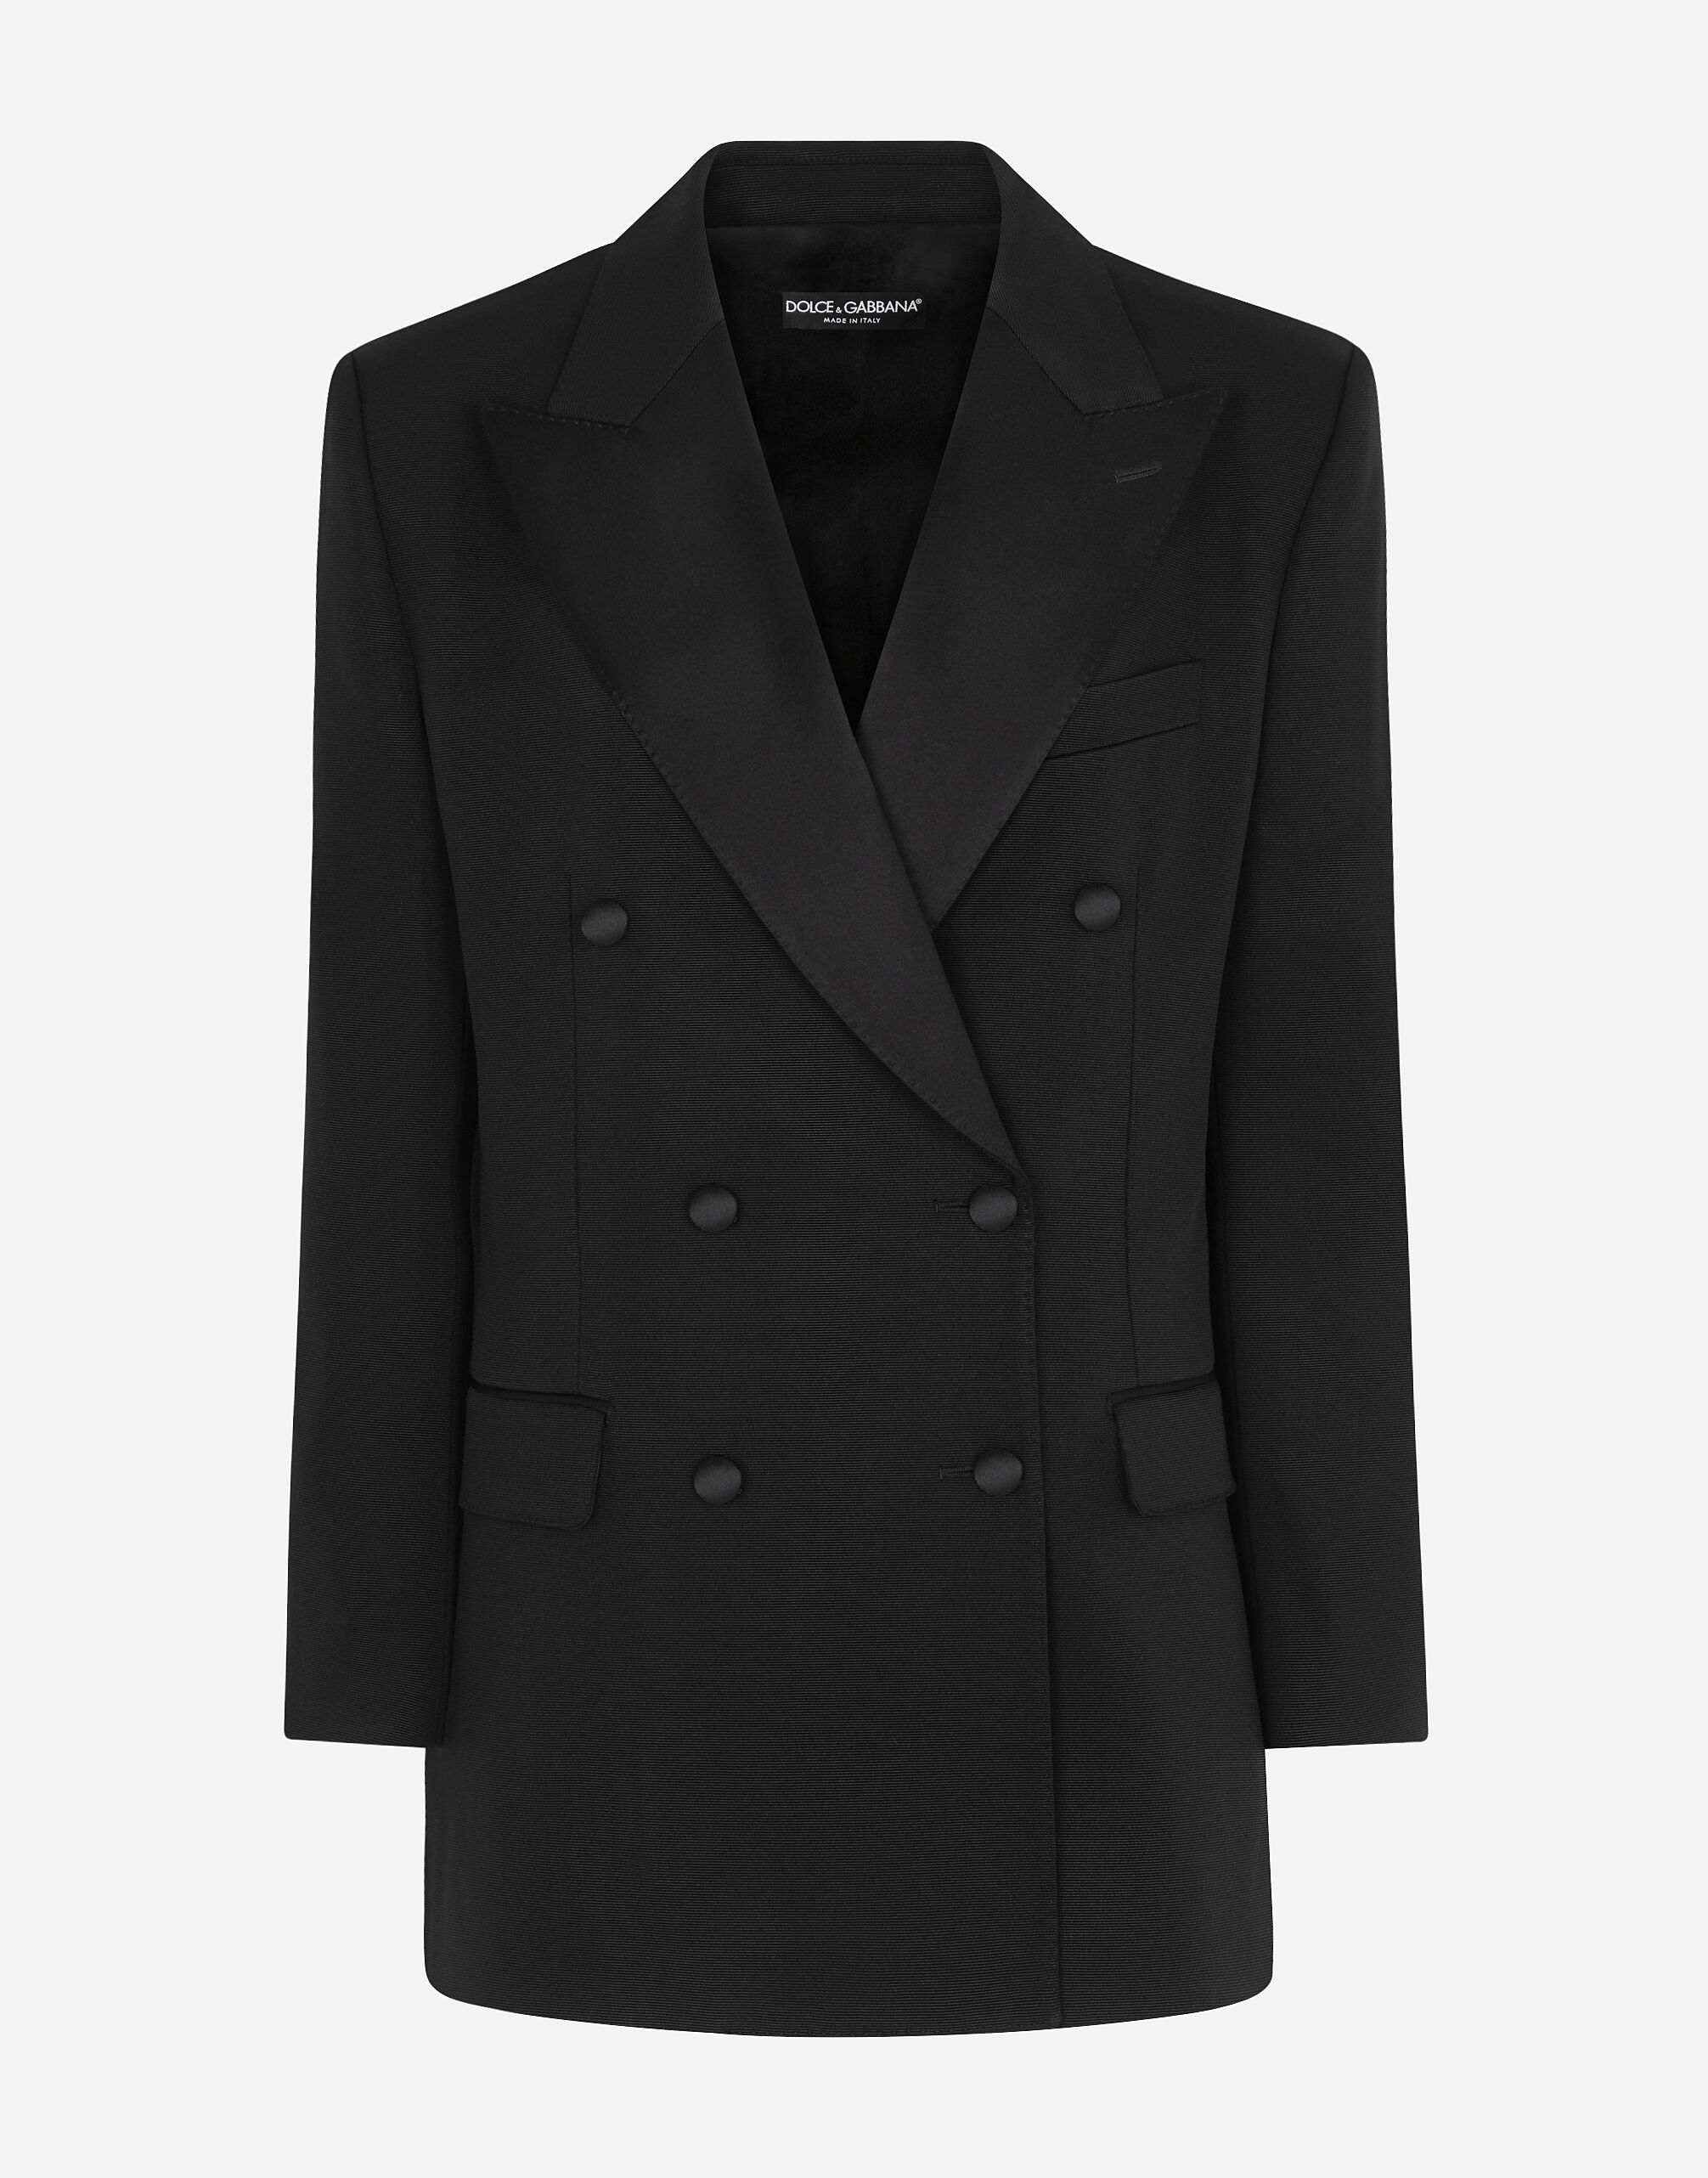 Dolce & Gabbana Double-breasted faille tuxedo jacket Black F26AHTFU23Q